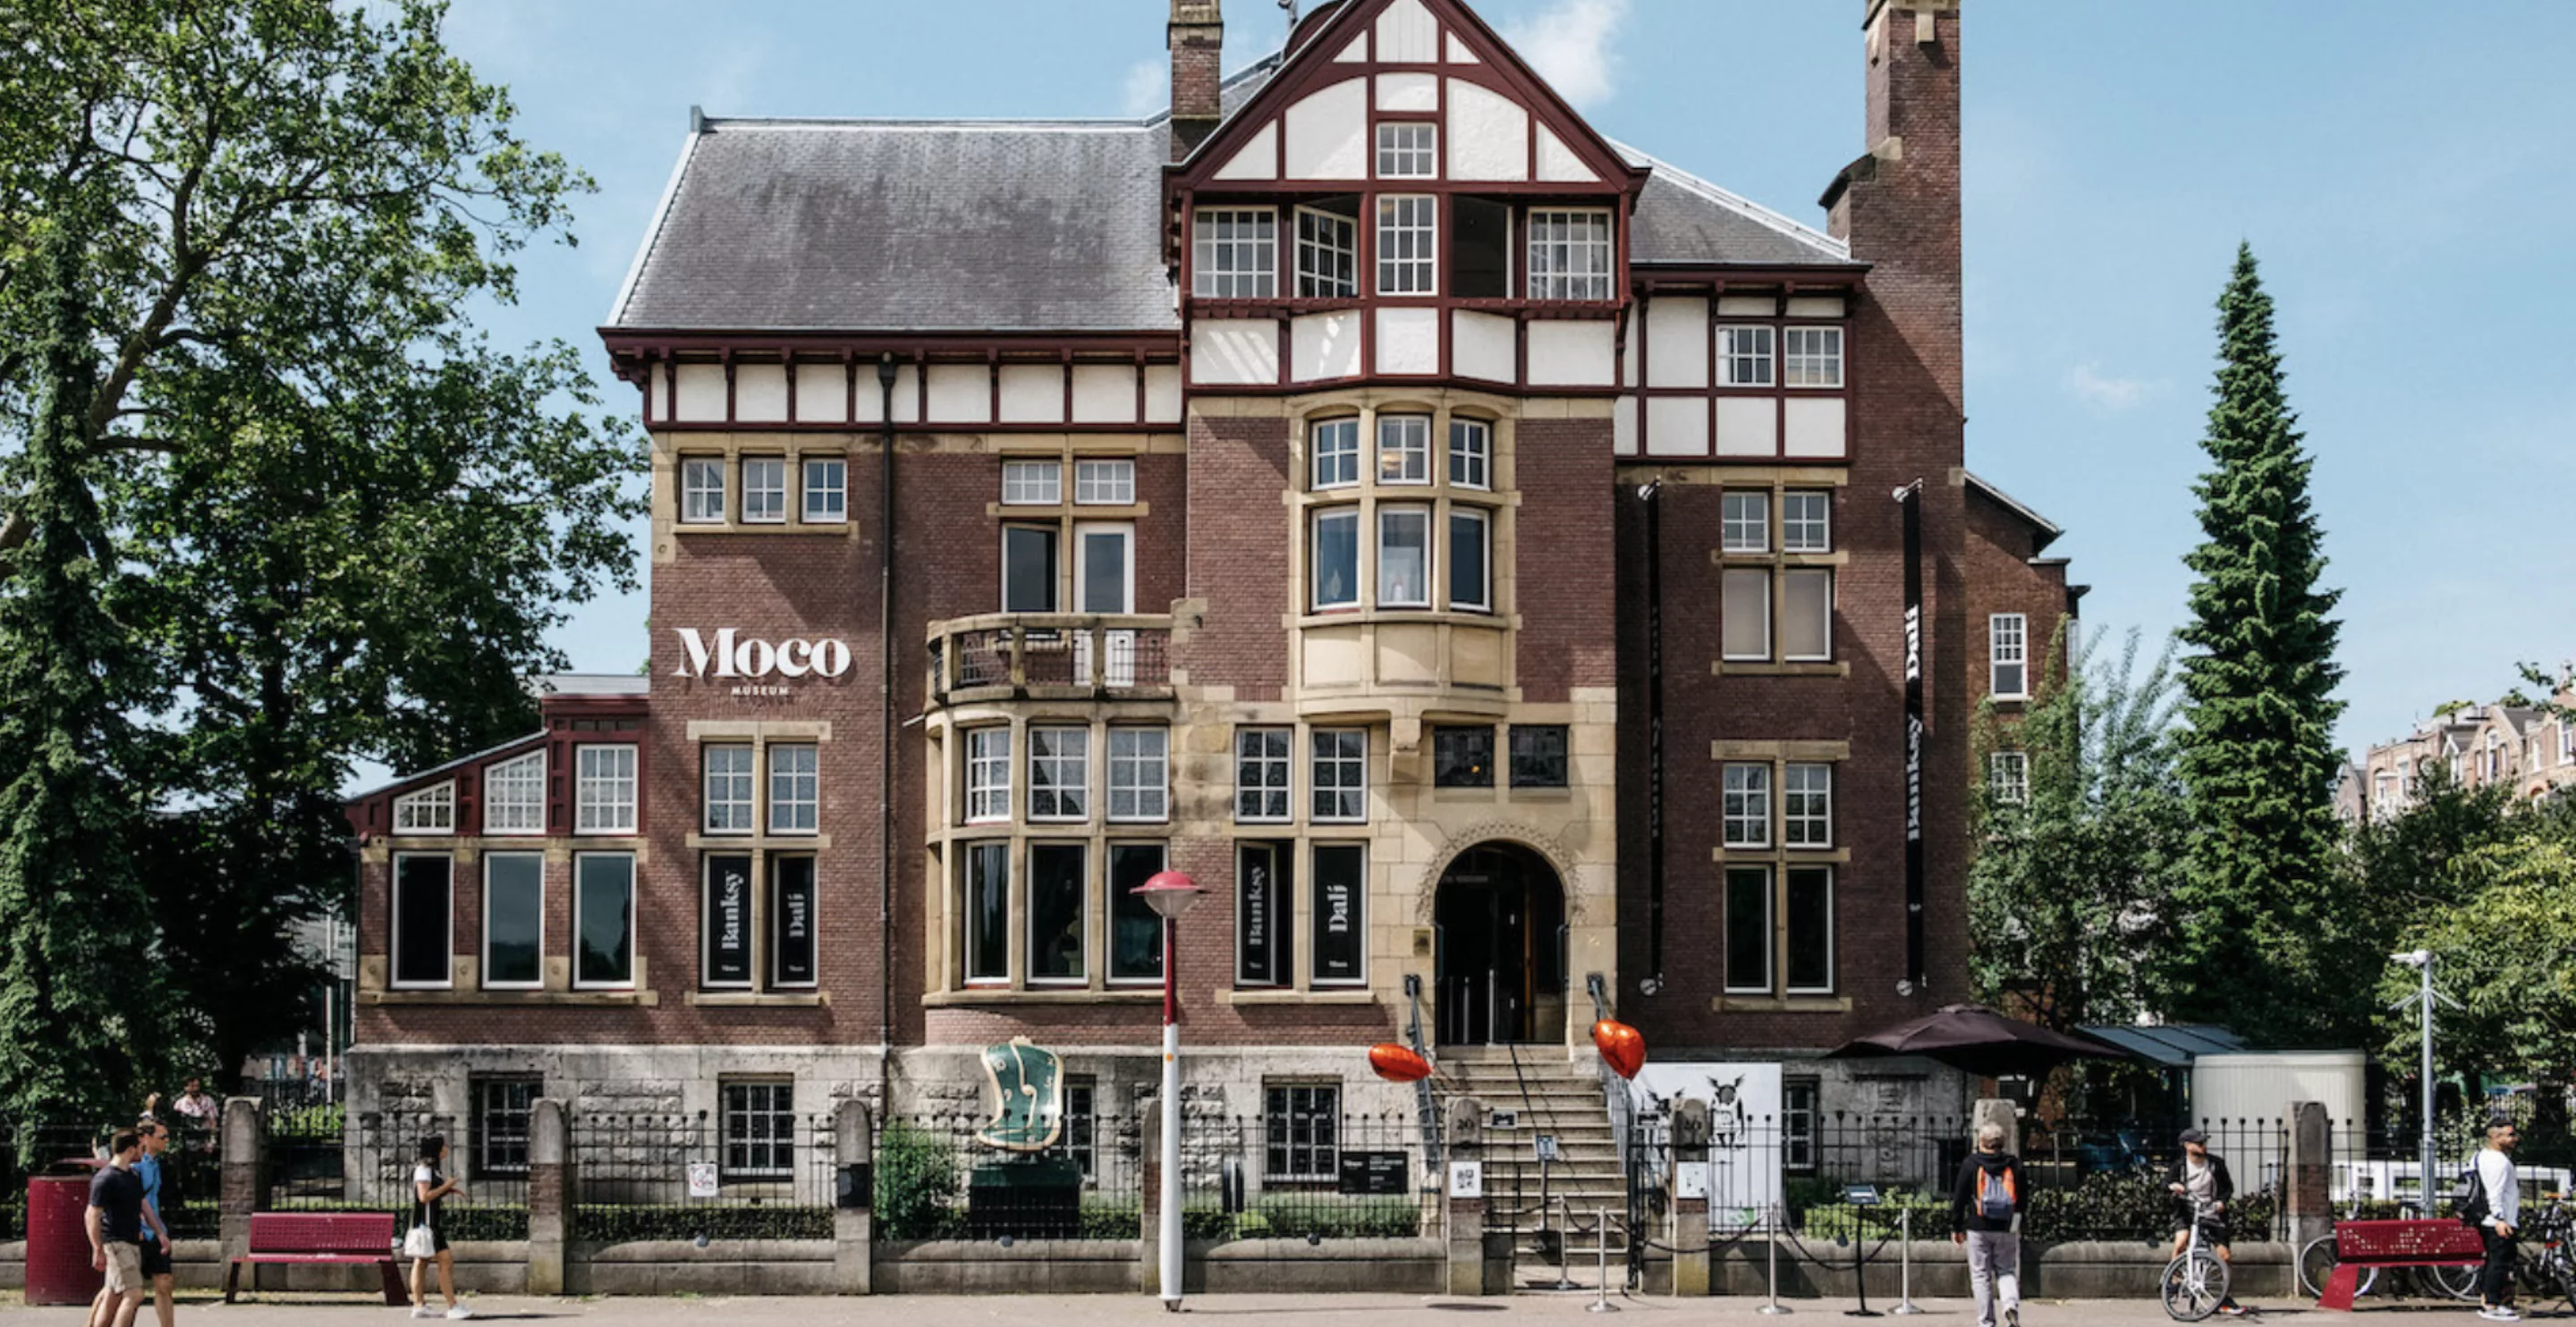 Moco museum Museumplein Amsterdam